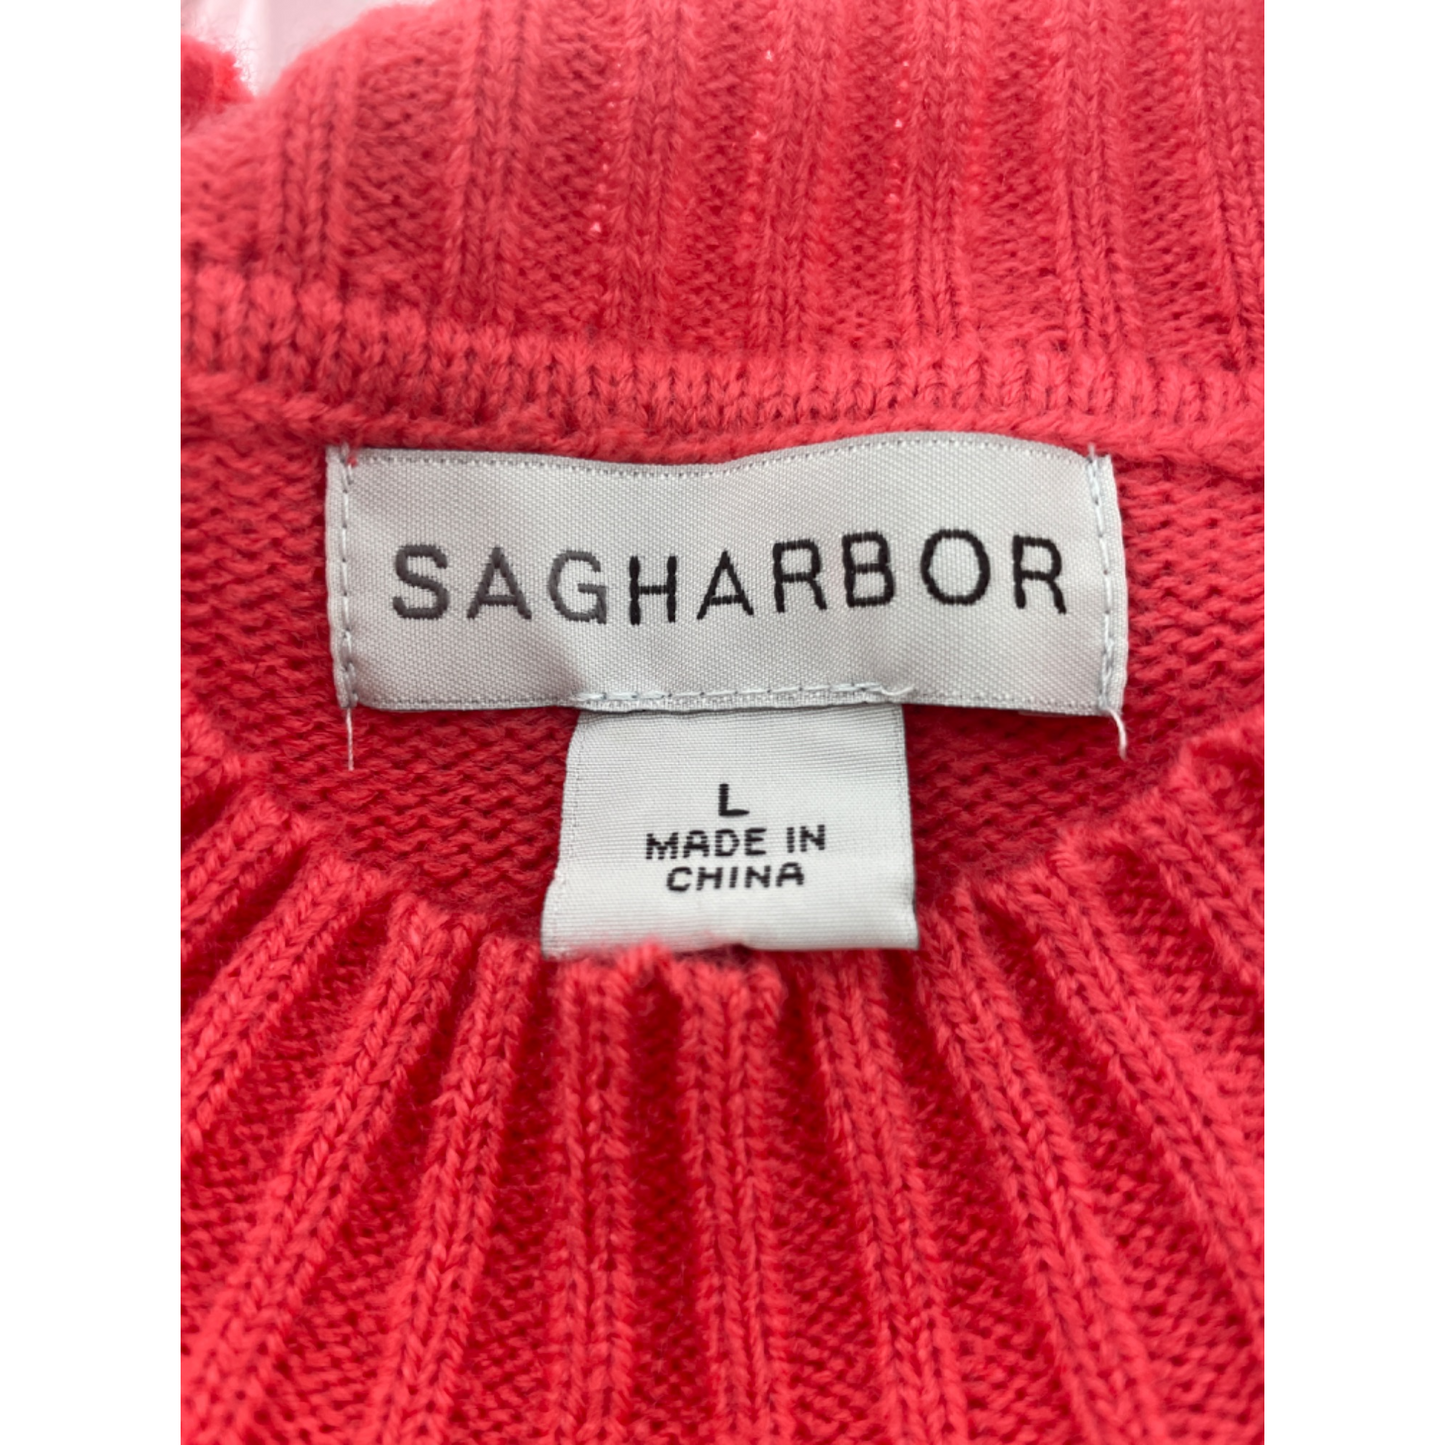 Sag Harbor Large Pink Knit Sweater